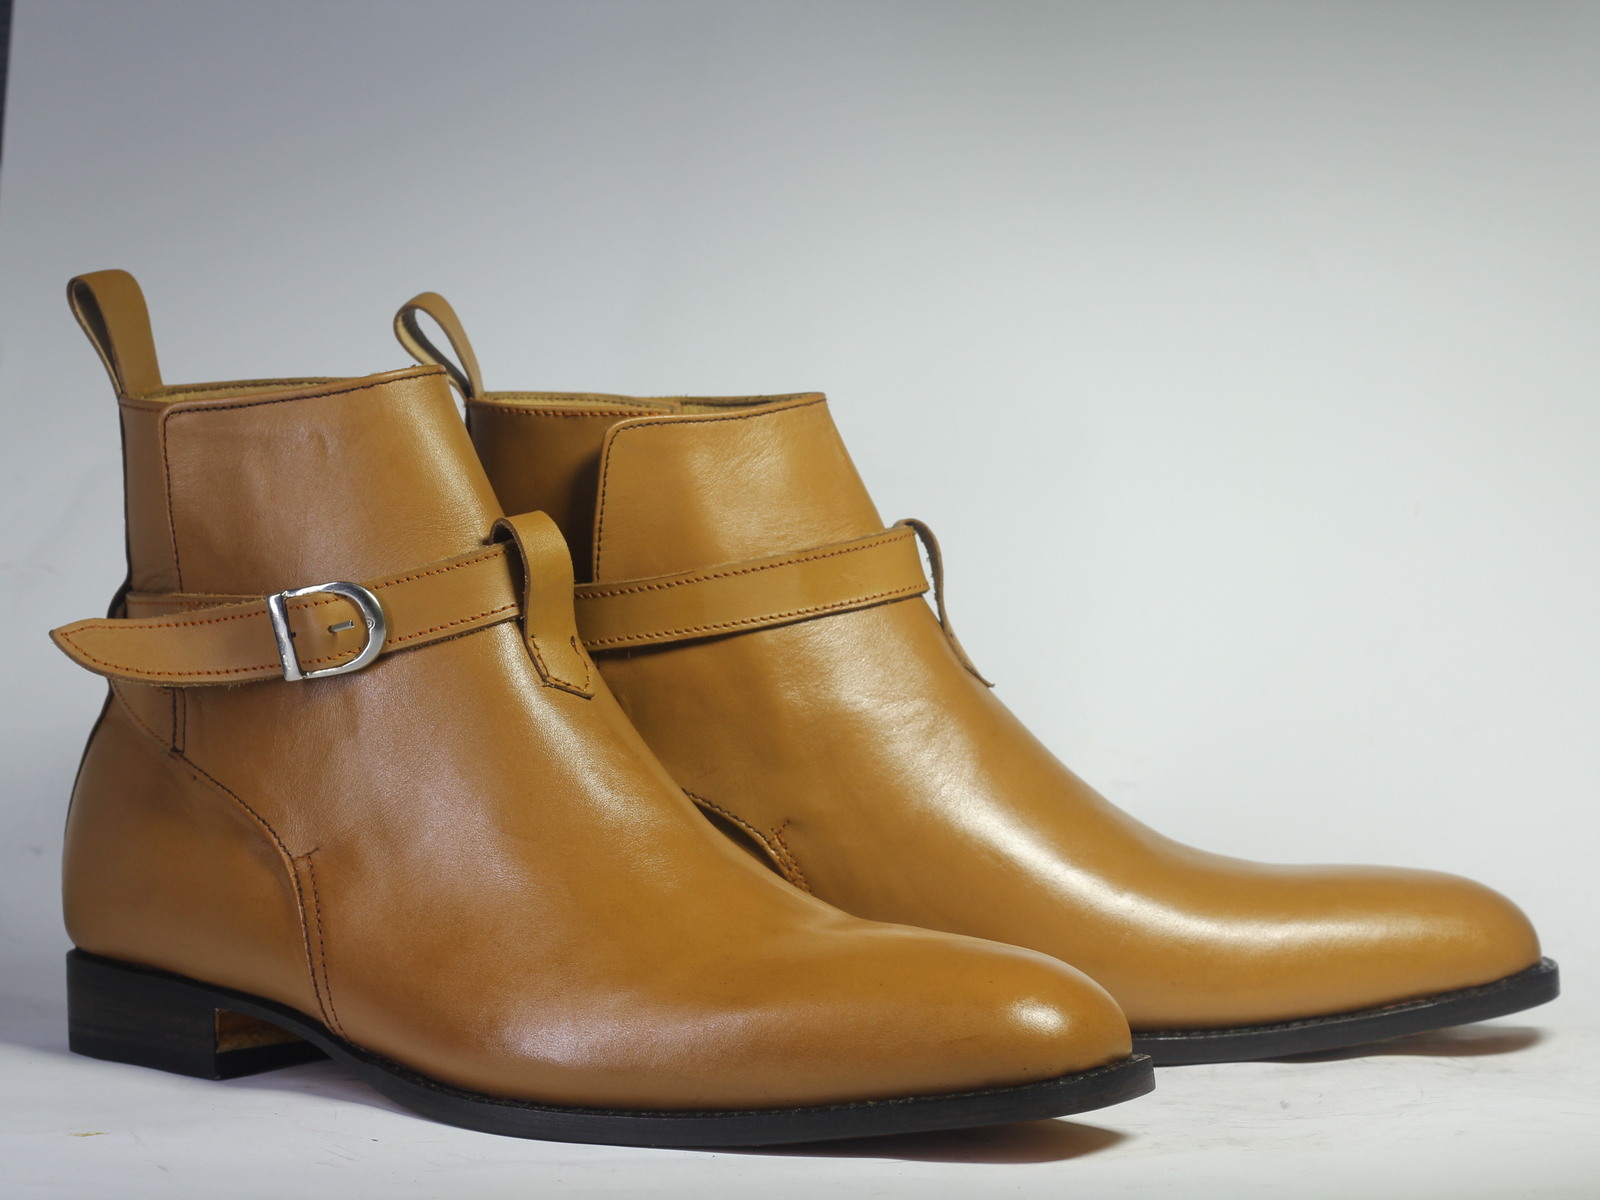 Handmade Men's Jodhpurs Tan Leather Boots, Men Ankle High Buckle Dress Boots